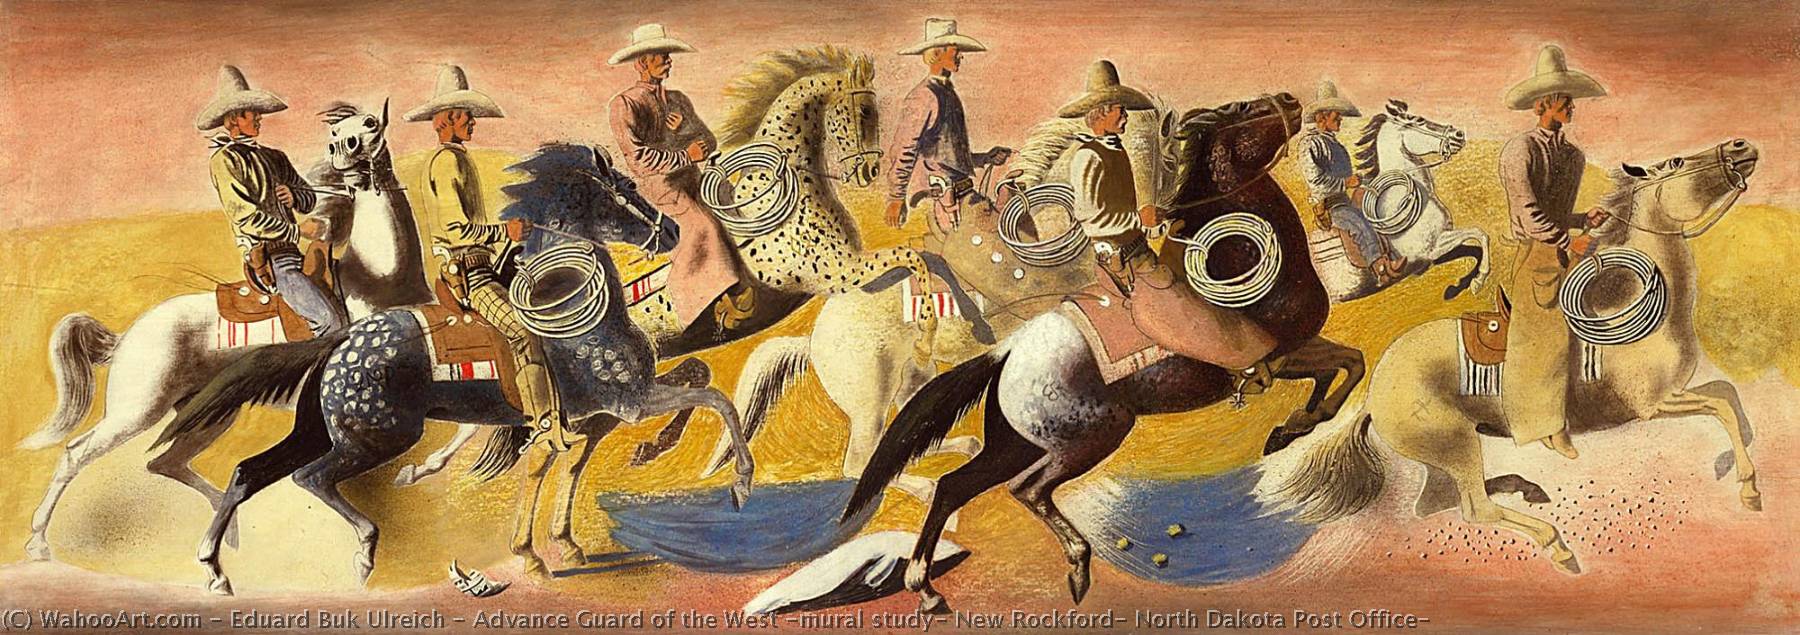 Advance Guard of the West (mural study, New Rockford, North Dakota Post Office), 1940 by Eduard Buk Ulreich (1884-1966) Eduard Buk Ulreich | ArtsDot.com